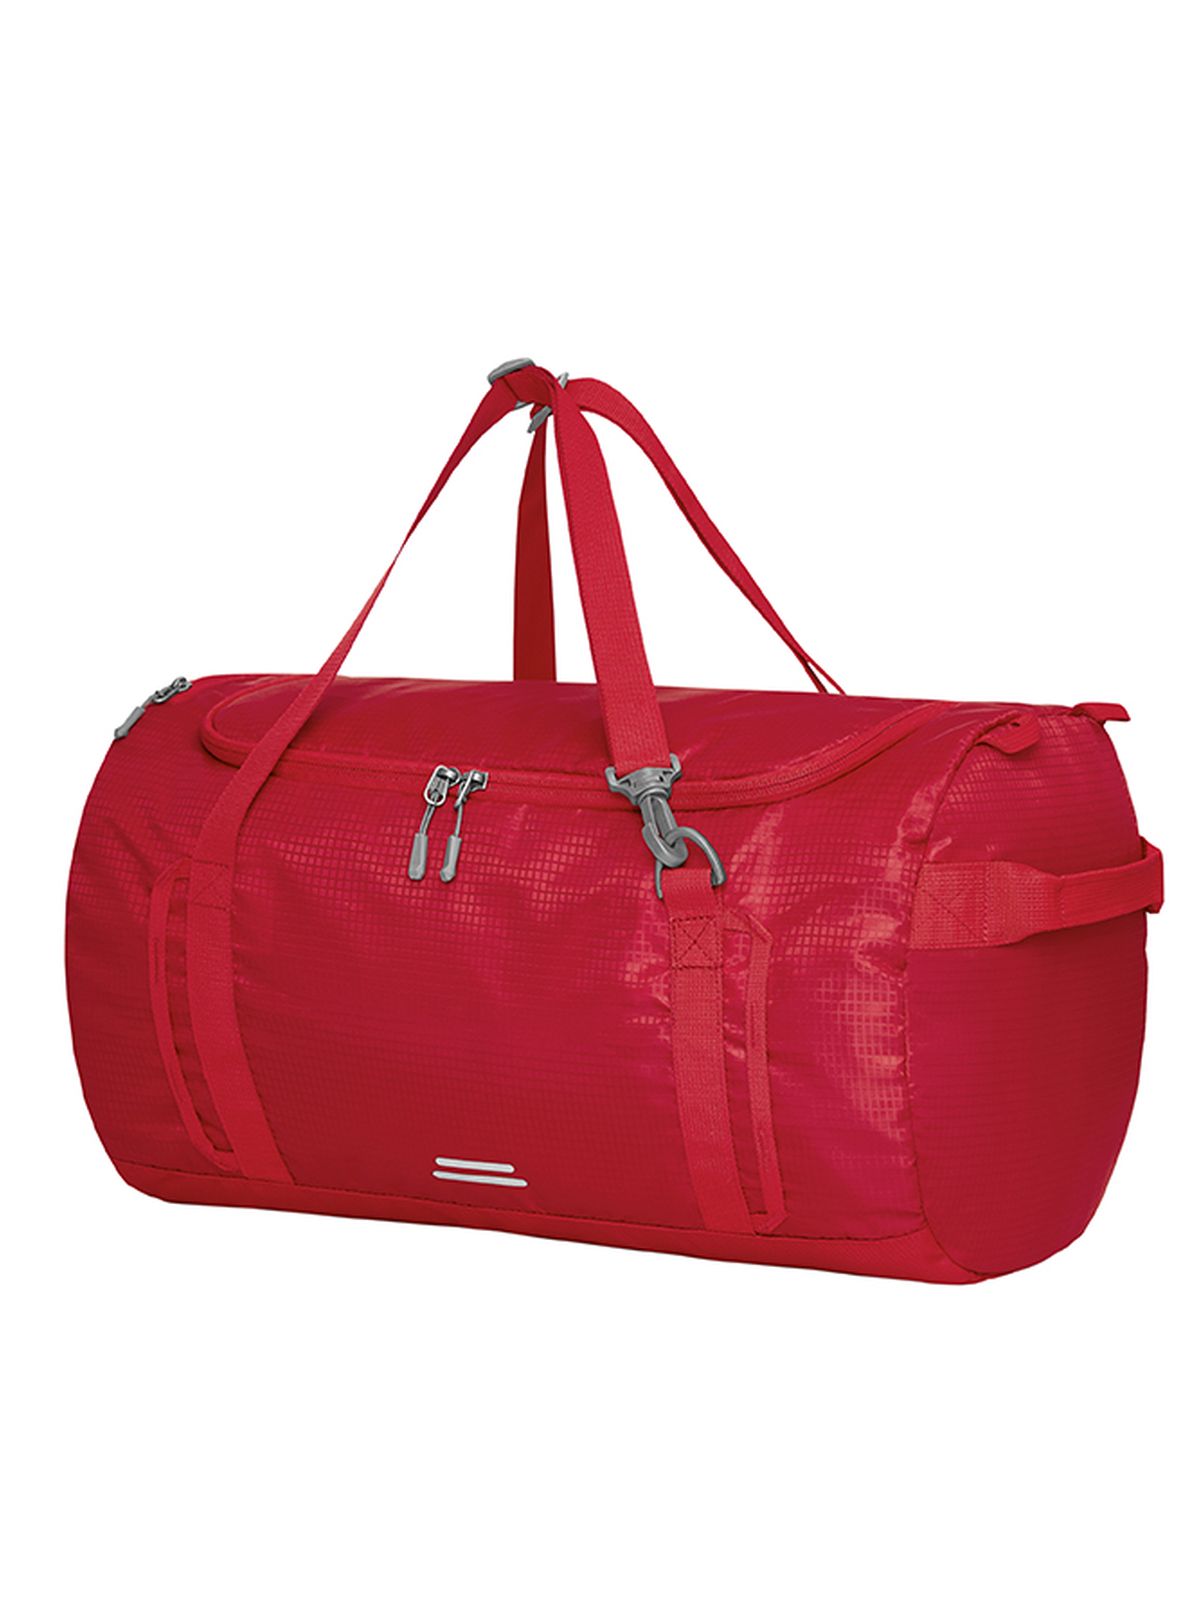 sports-bag-outdoor-red.webp